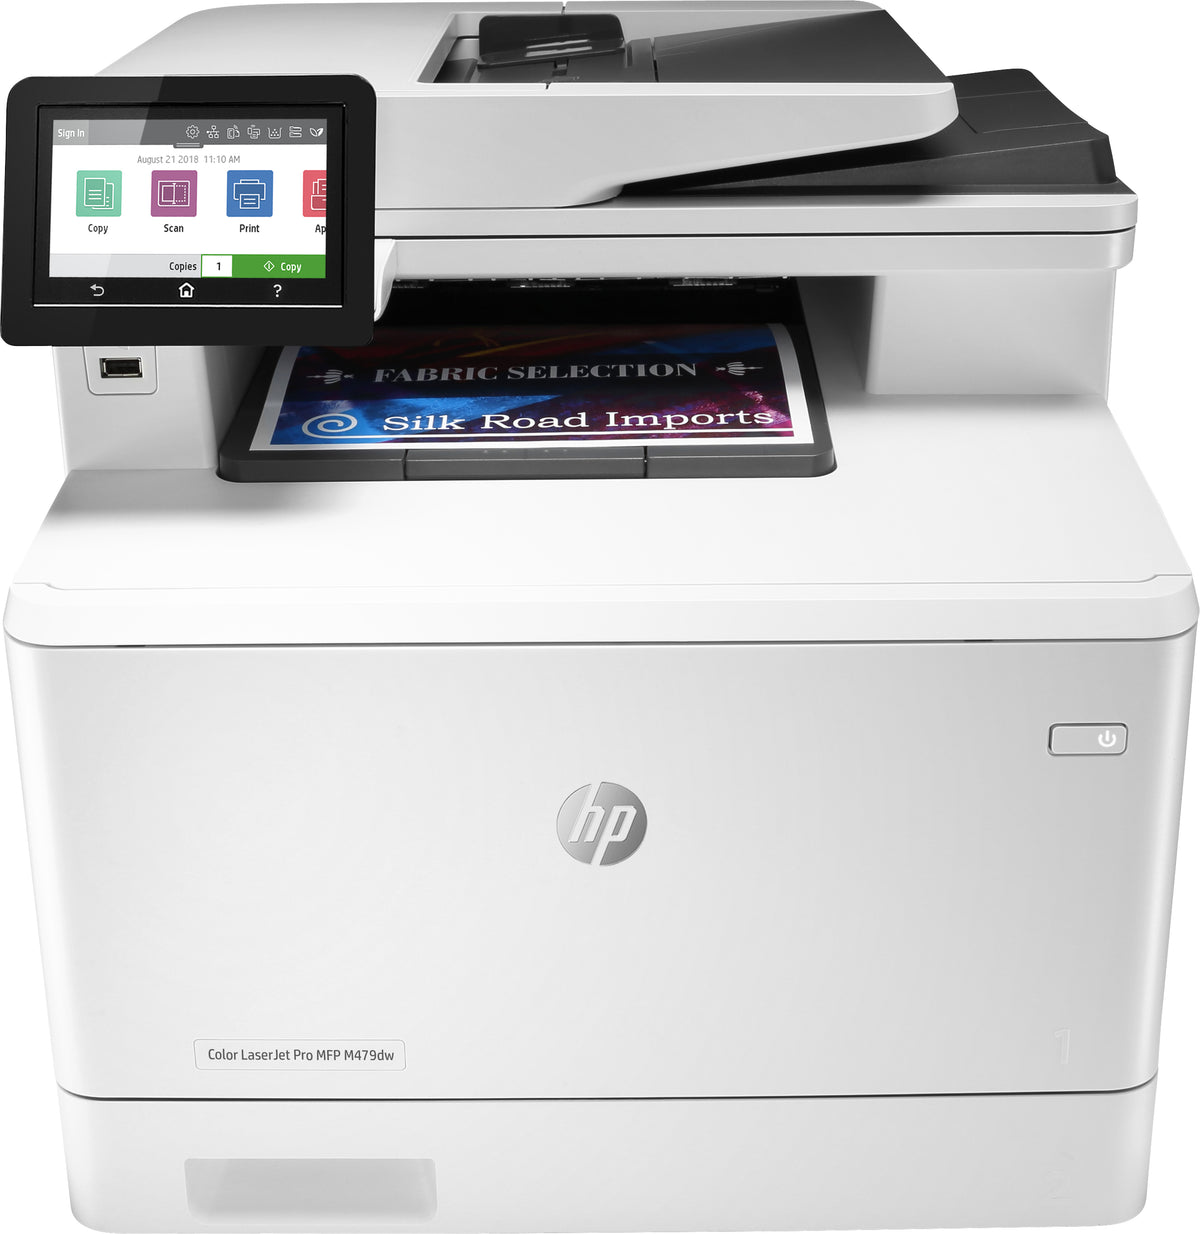 HP Color LaserJet Pro MFP M479dw - Impresora multifunción - Color - Láser - Legal (216 x 356 mm) (original) - A4/Legal (soportes) - hasta 27 ppm (copia) - hasta 27 ppm (impresión) - 300 hojas - USB 2.0, LAN, Wi-Fi(n), host USB